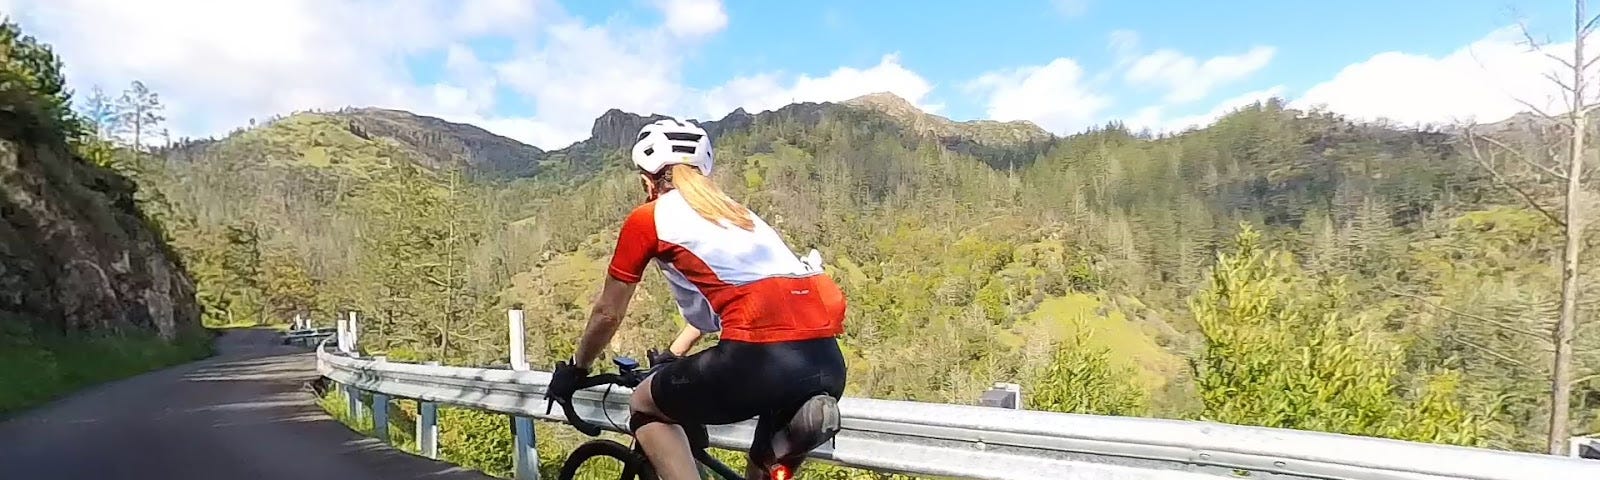 Cyclist climbing the Mayacamas Mountains that surround Calistoga in Napa Valley